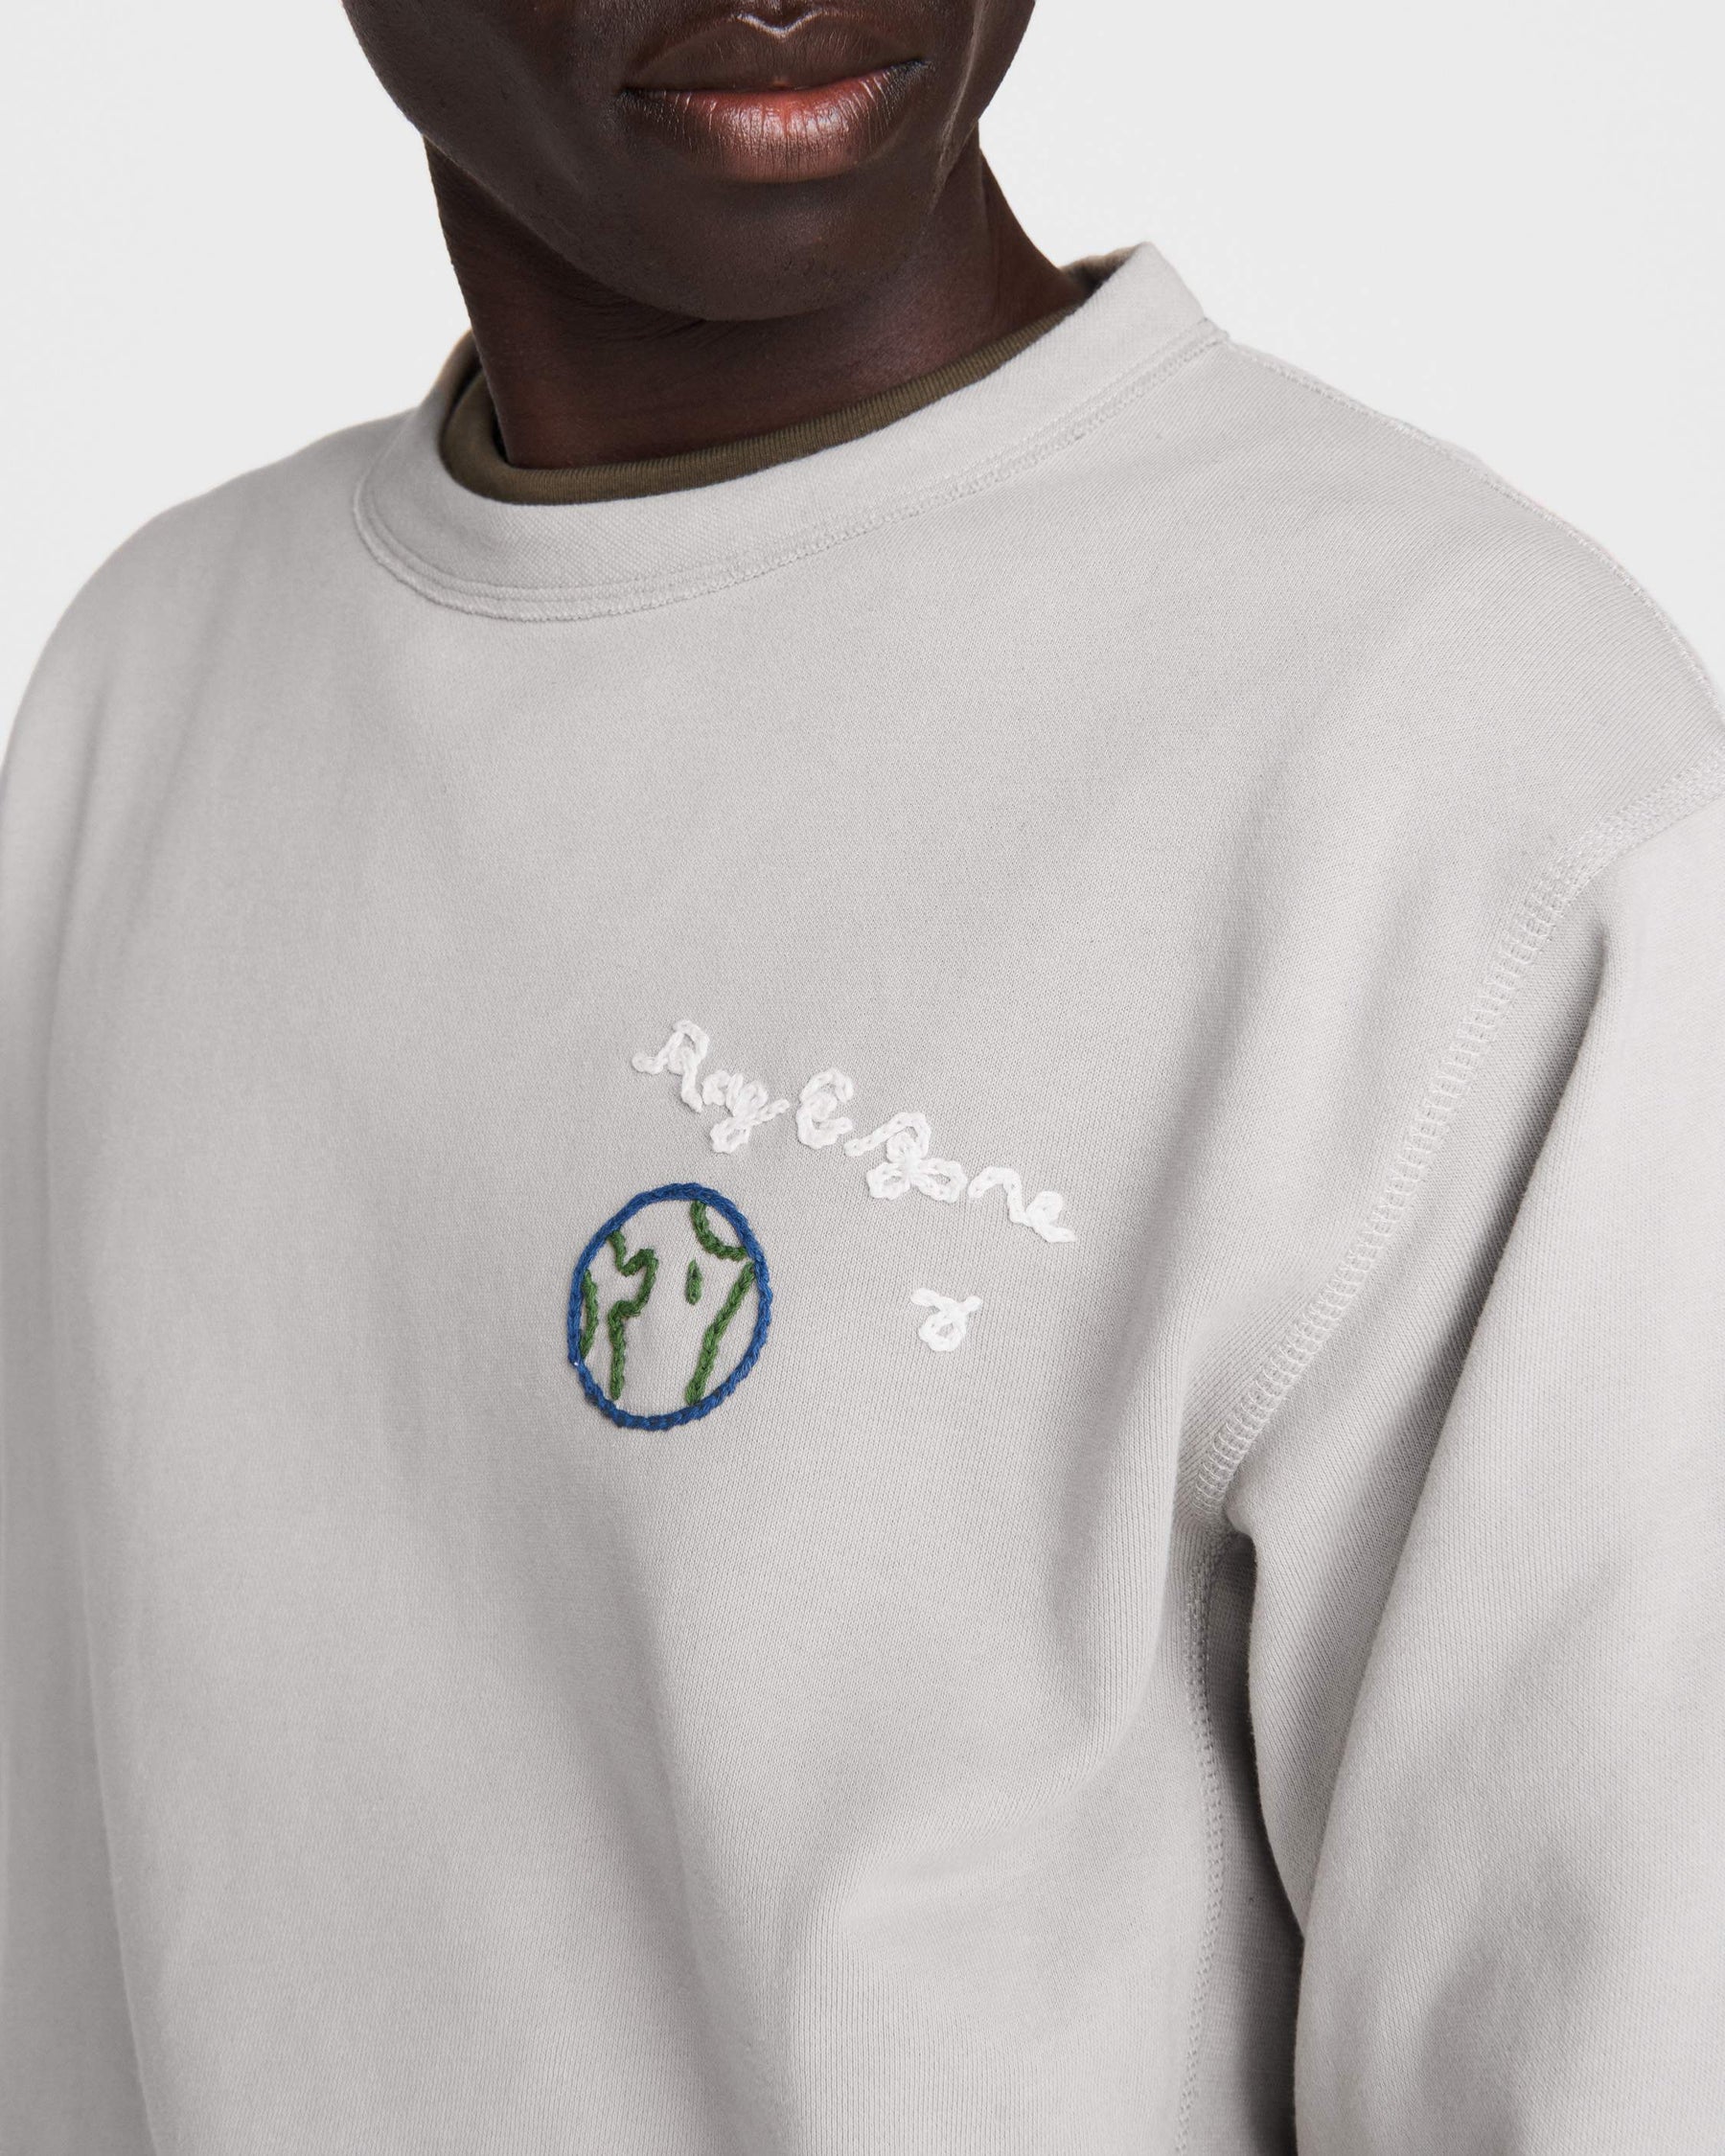 Hand-Knit Graphic City Sweatshirt